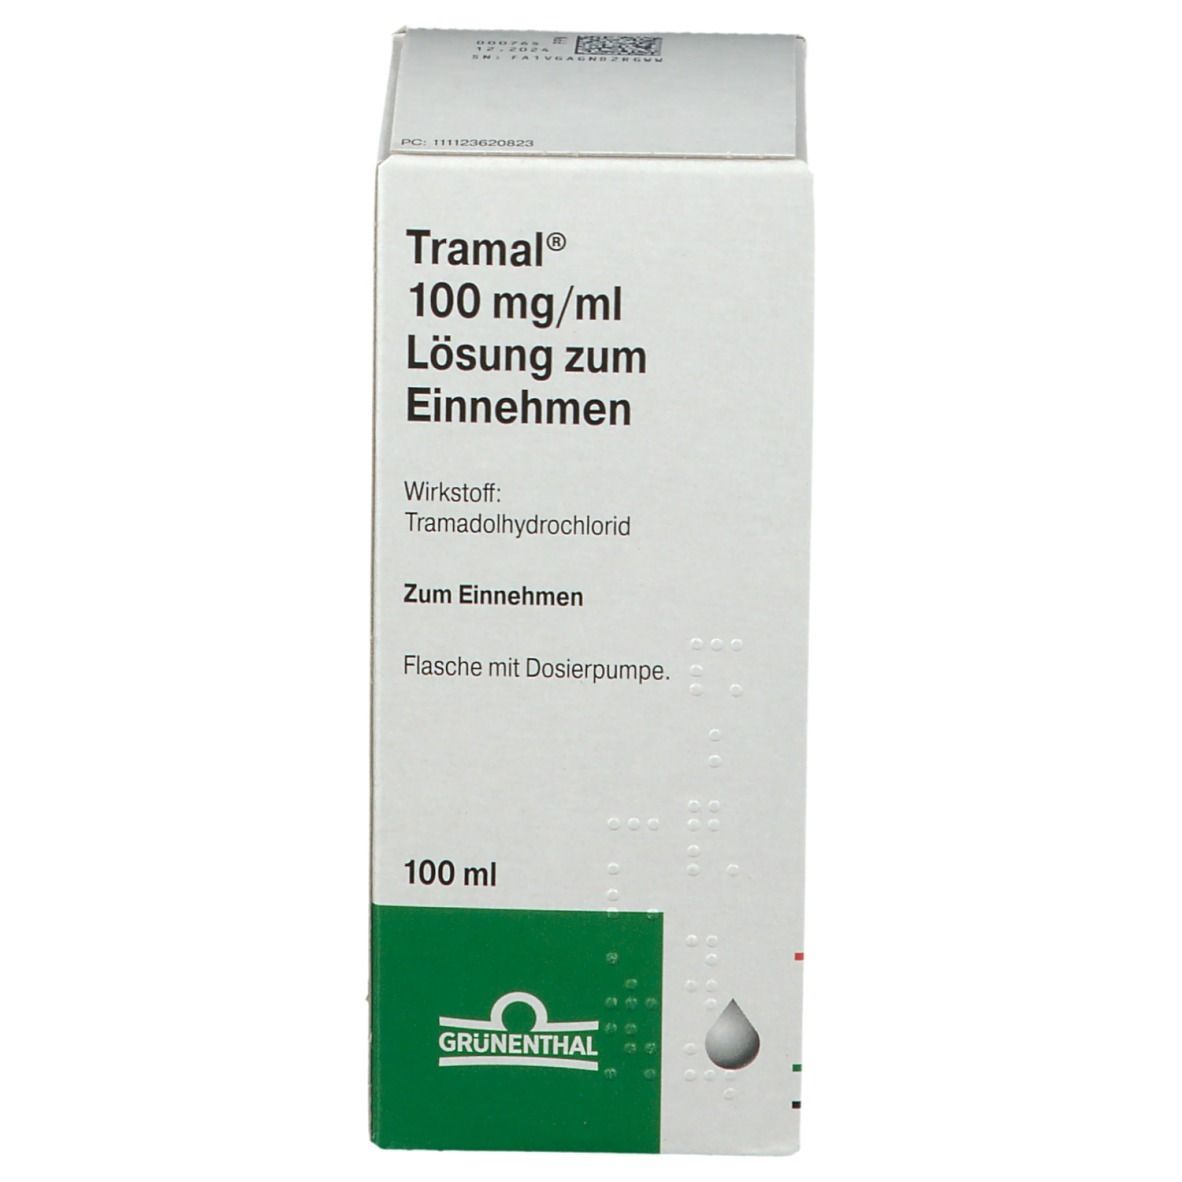 Tramal® 100 mg/ml